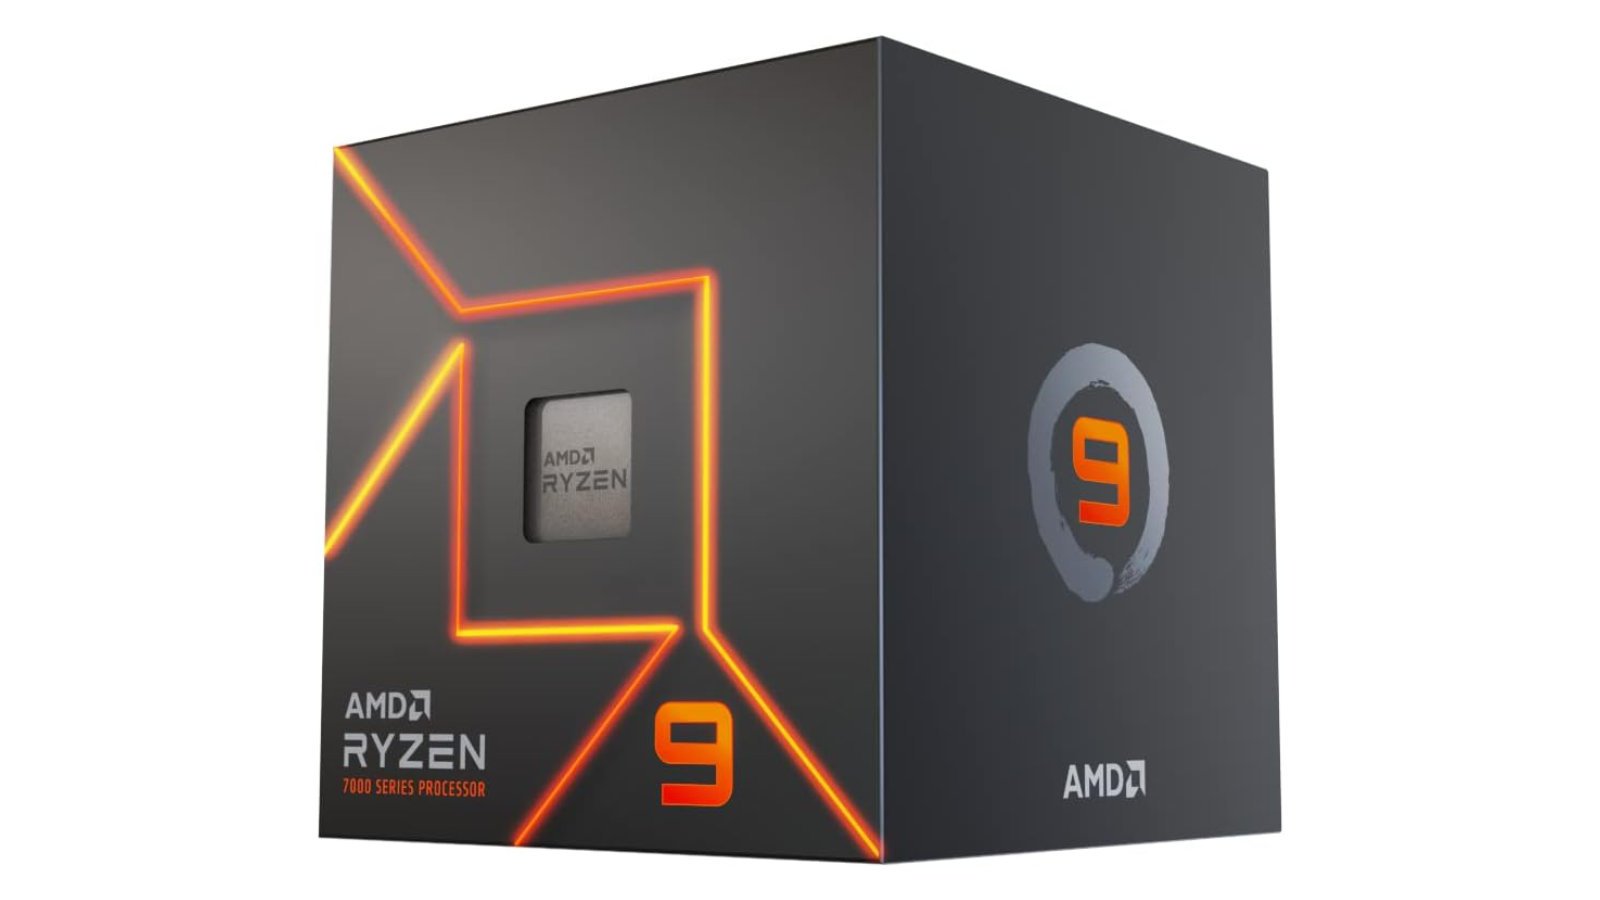 AMD Ryzen 9 7950X CPU product retail packaging.